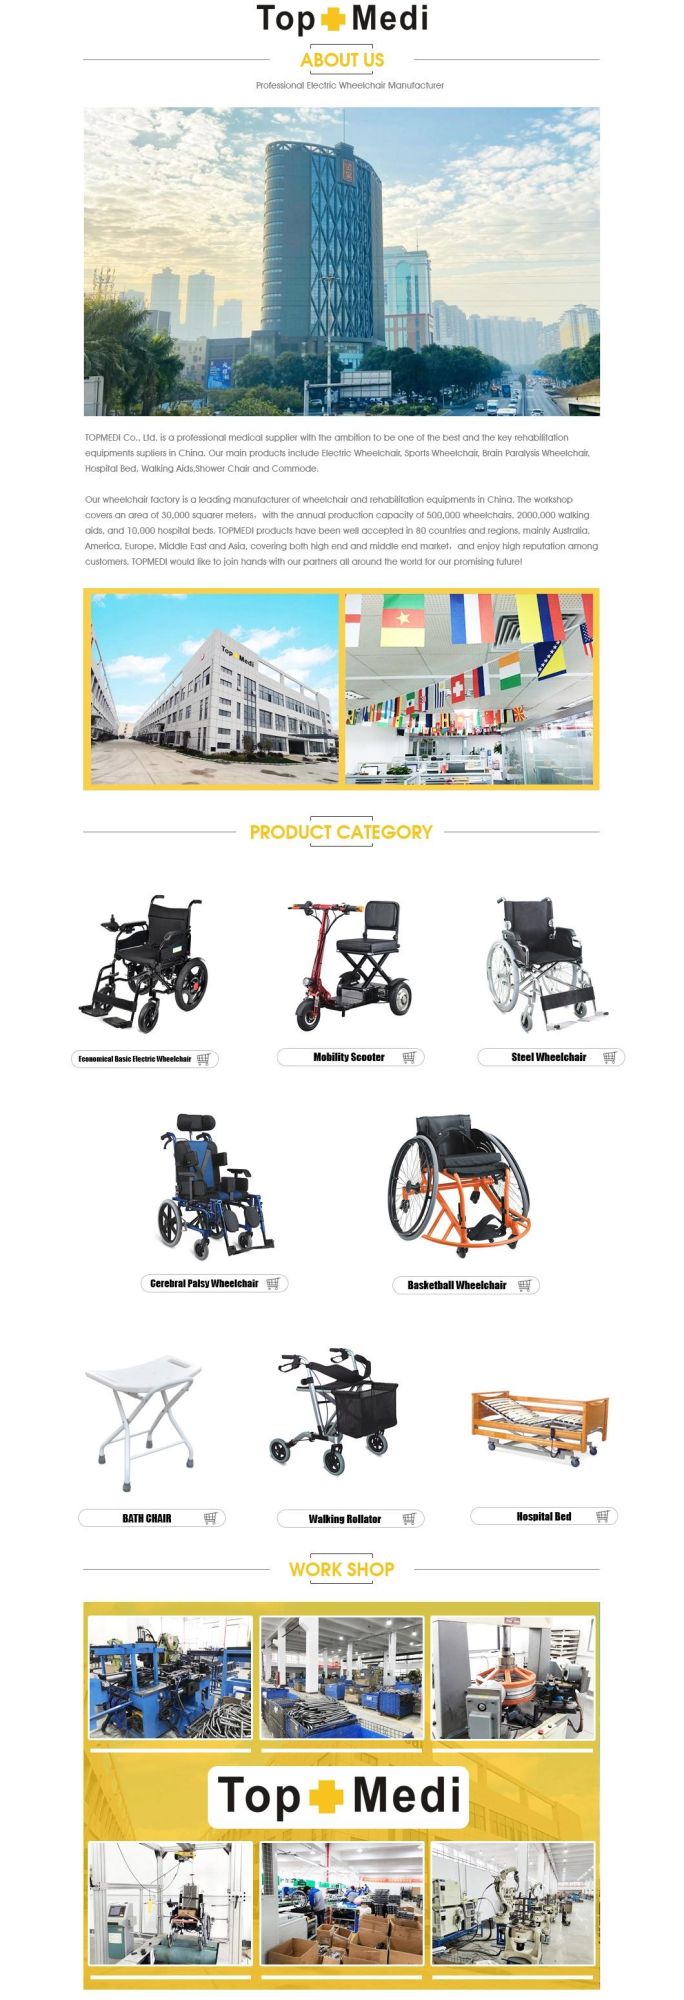 PU Armrest Powered Steel Frame Wheelchair in Big Sale